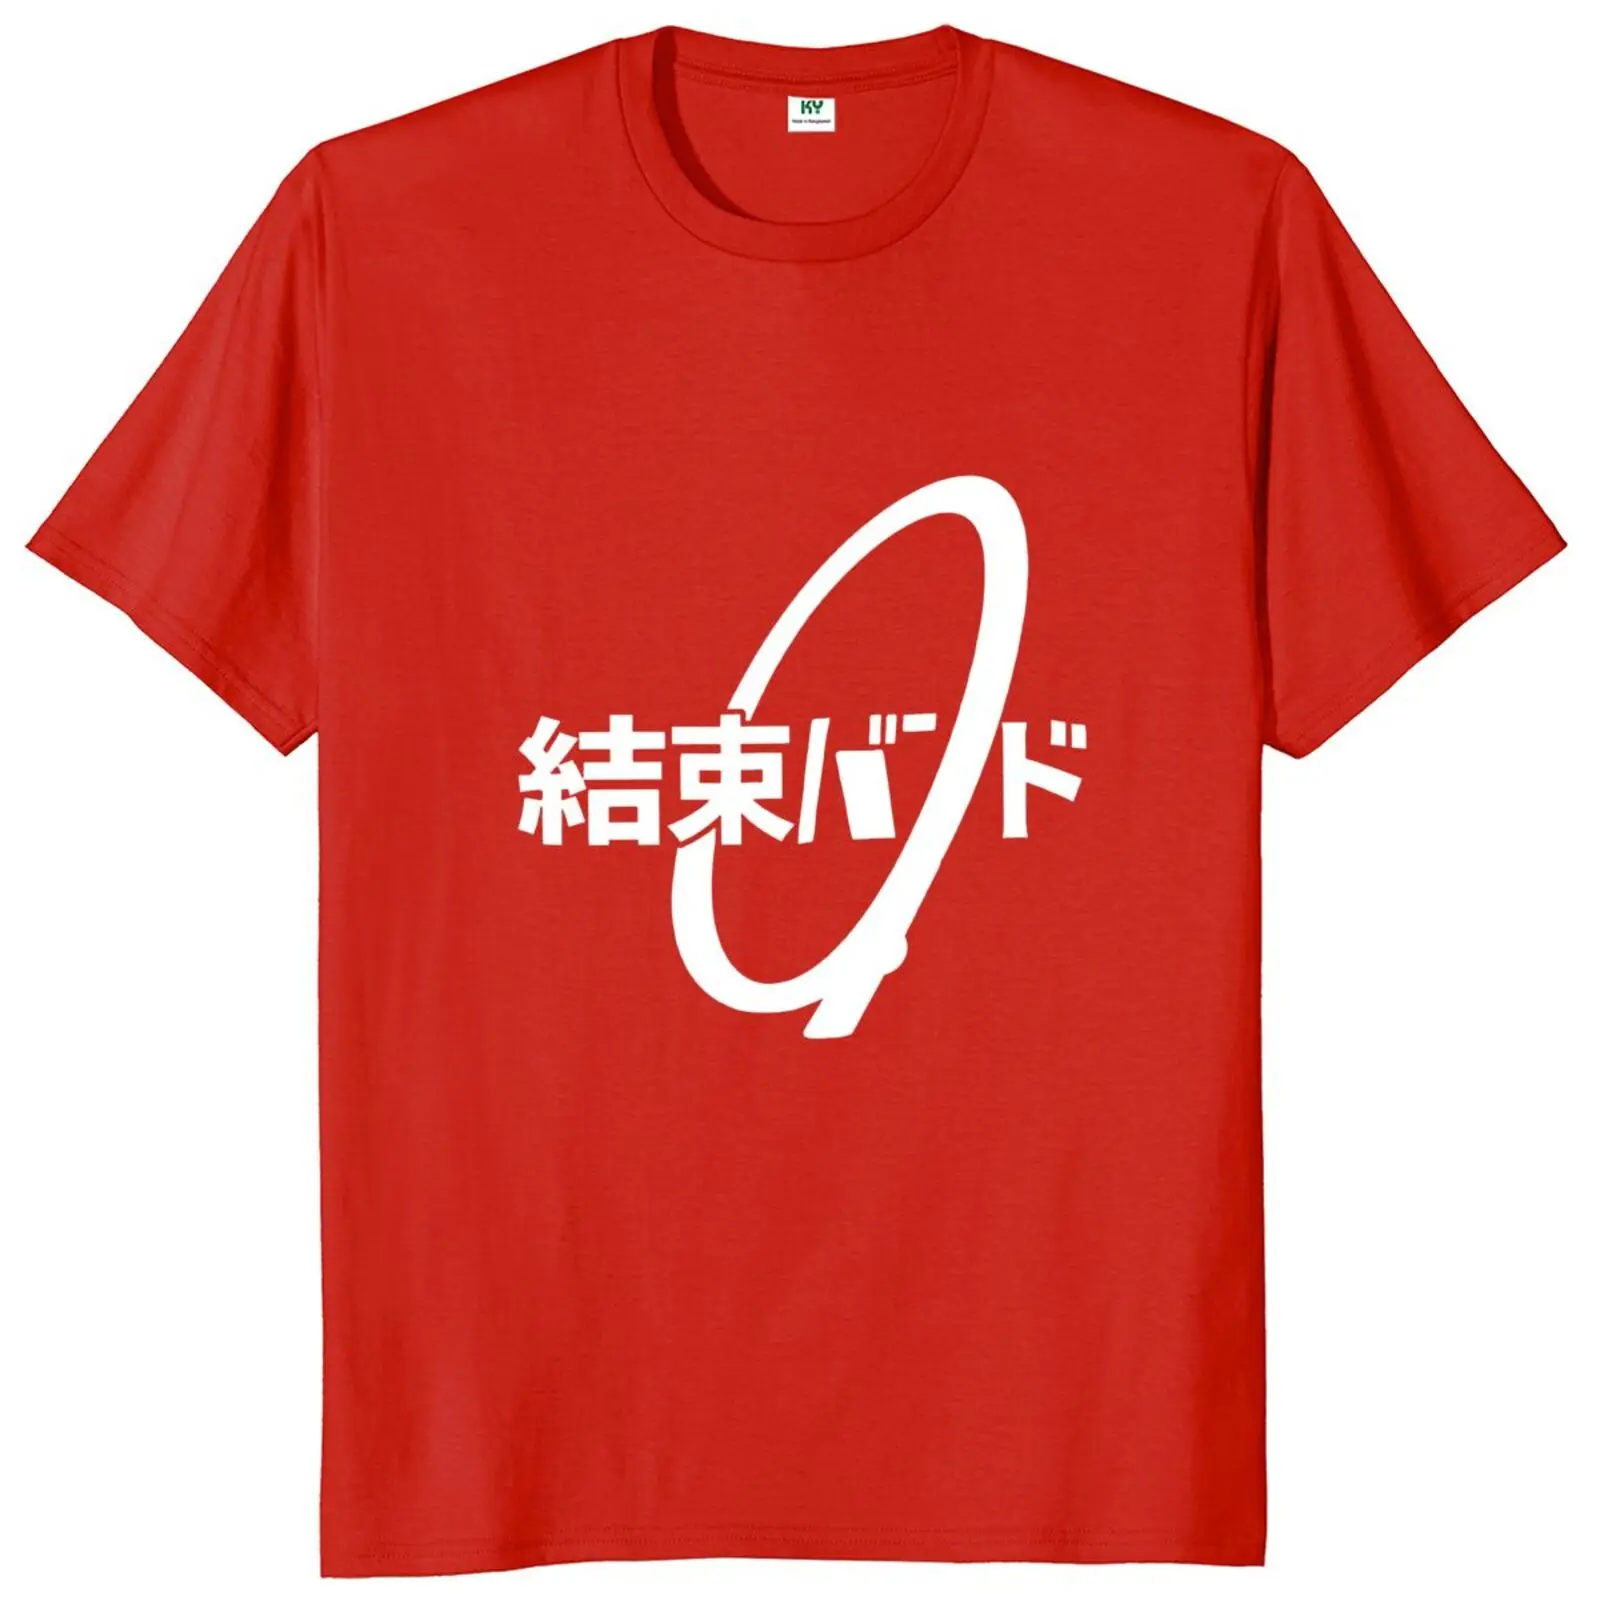 T-shirt Kanji Kiragana Kessoku en 100% coton, taille européenne